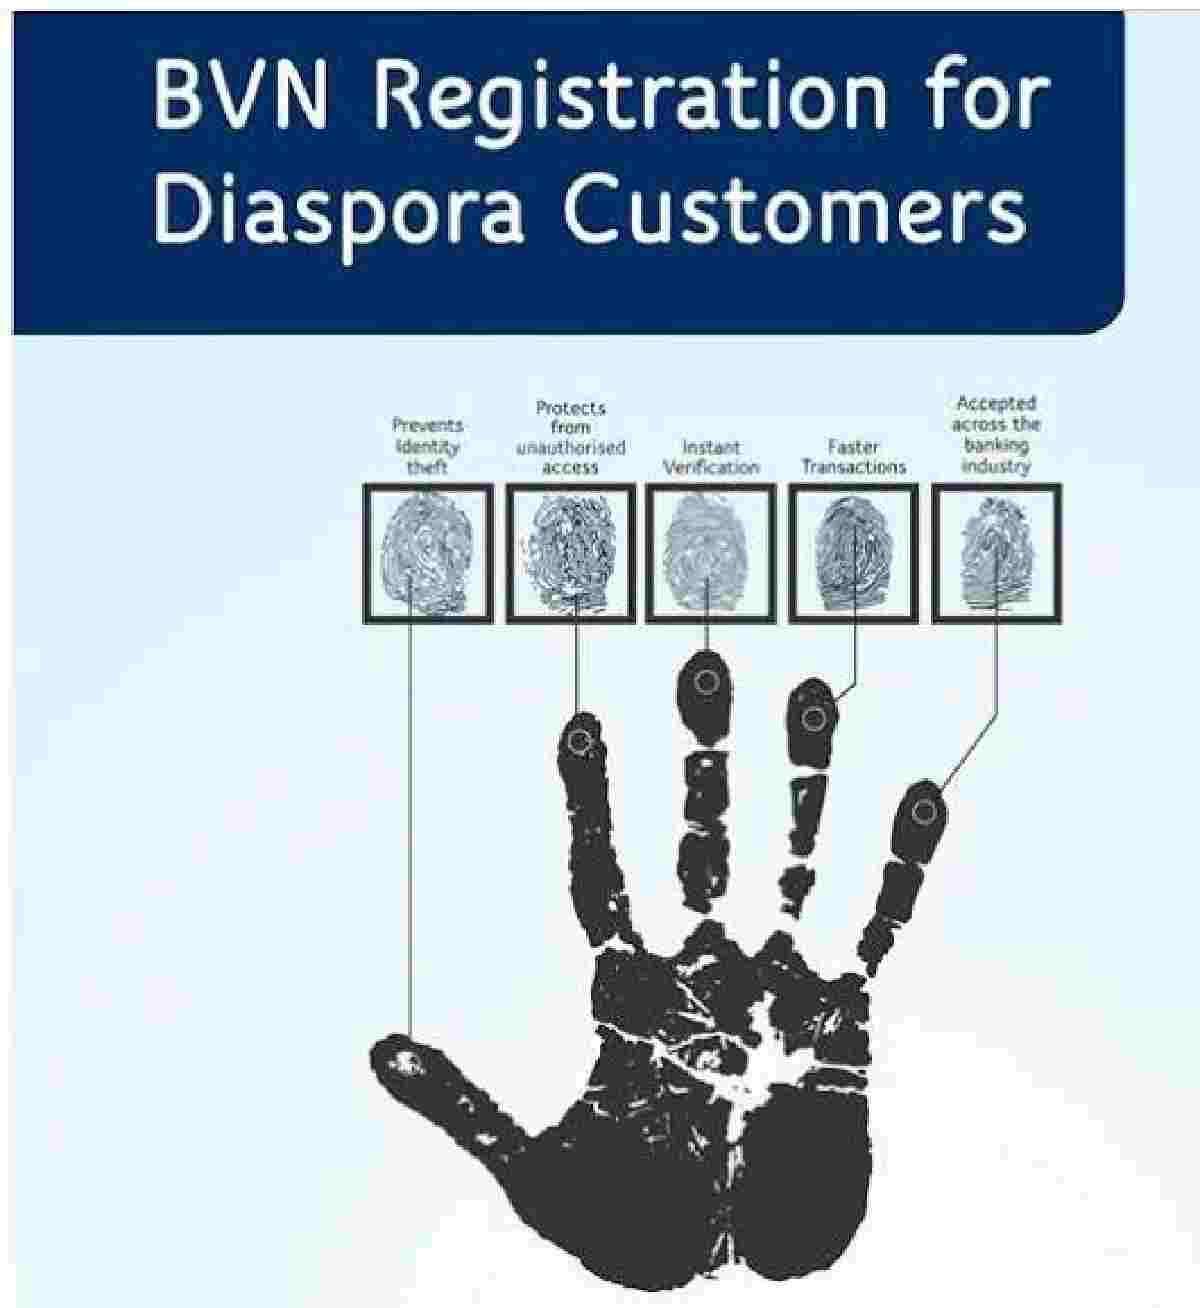 How to register for bvn